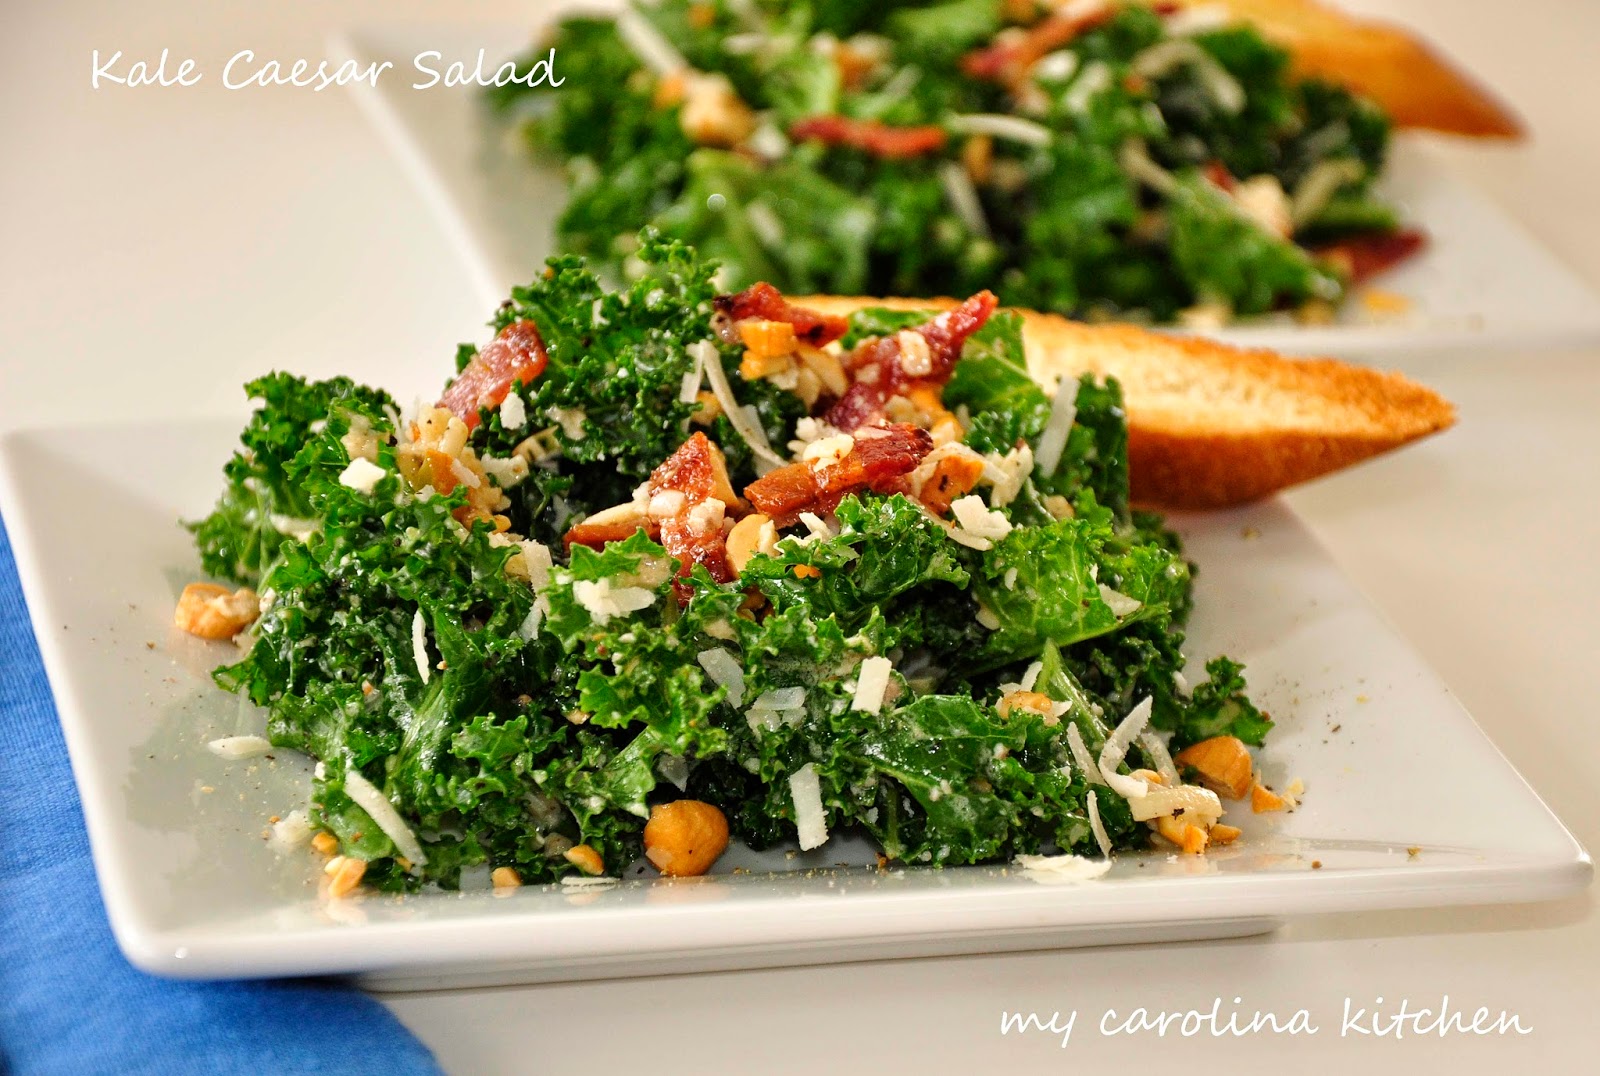 My Carolina Kitchen: Kale Caesar Salad with Smoky Bacon and Cashews - A ...